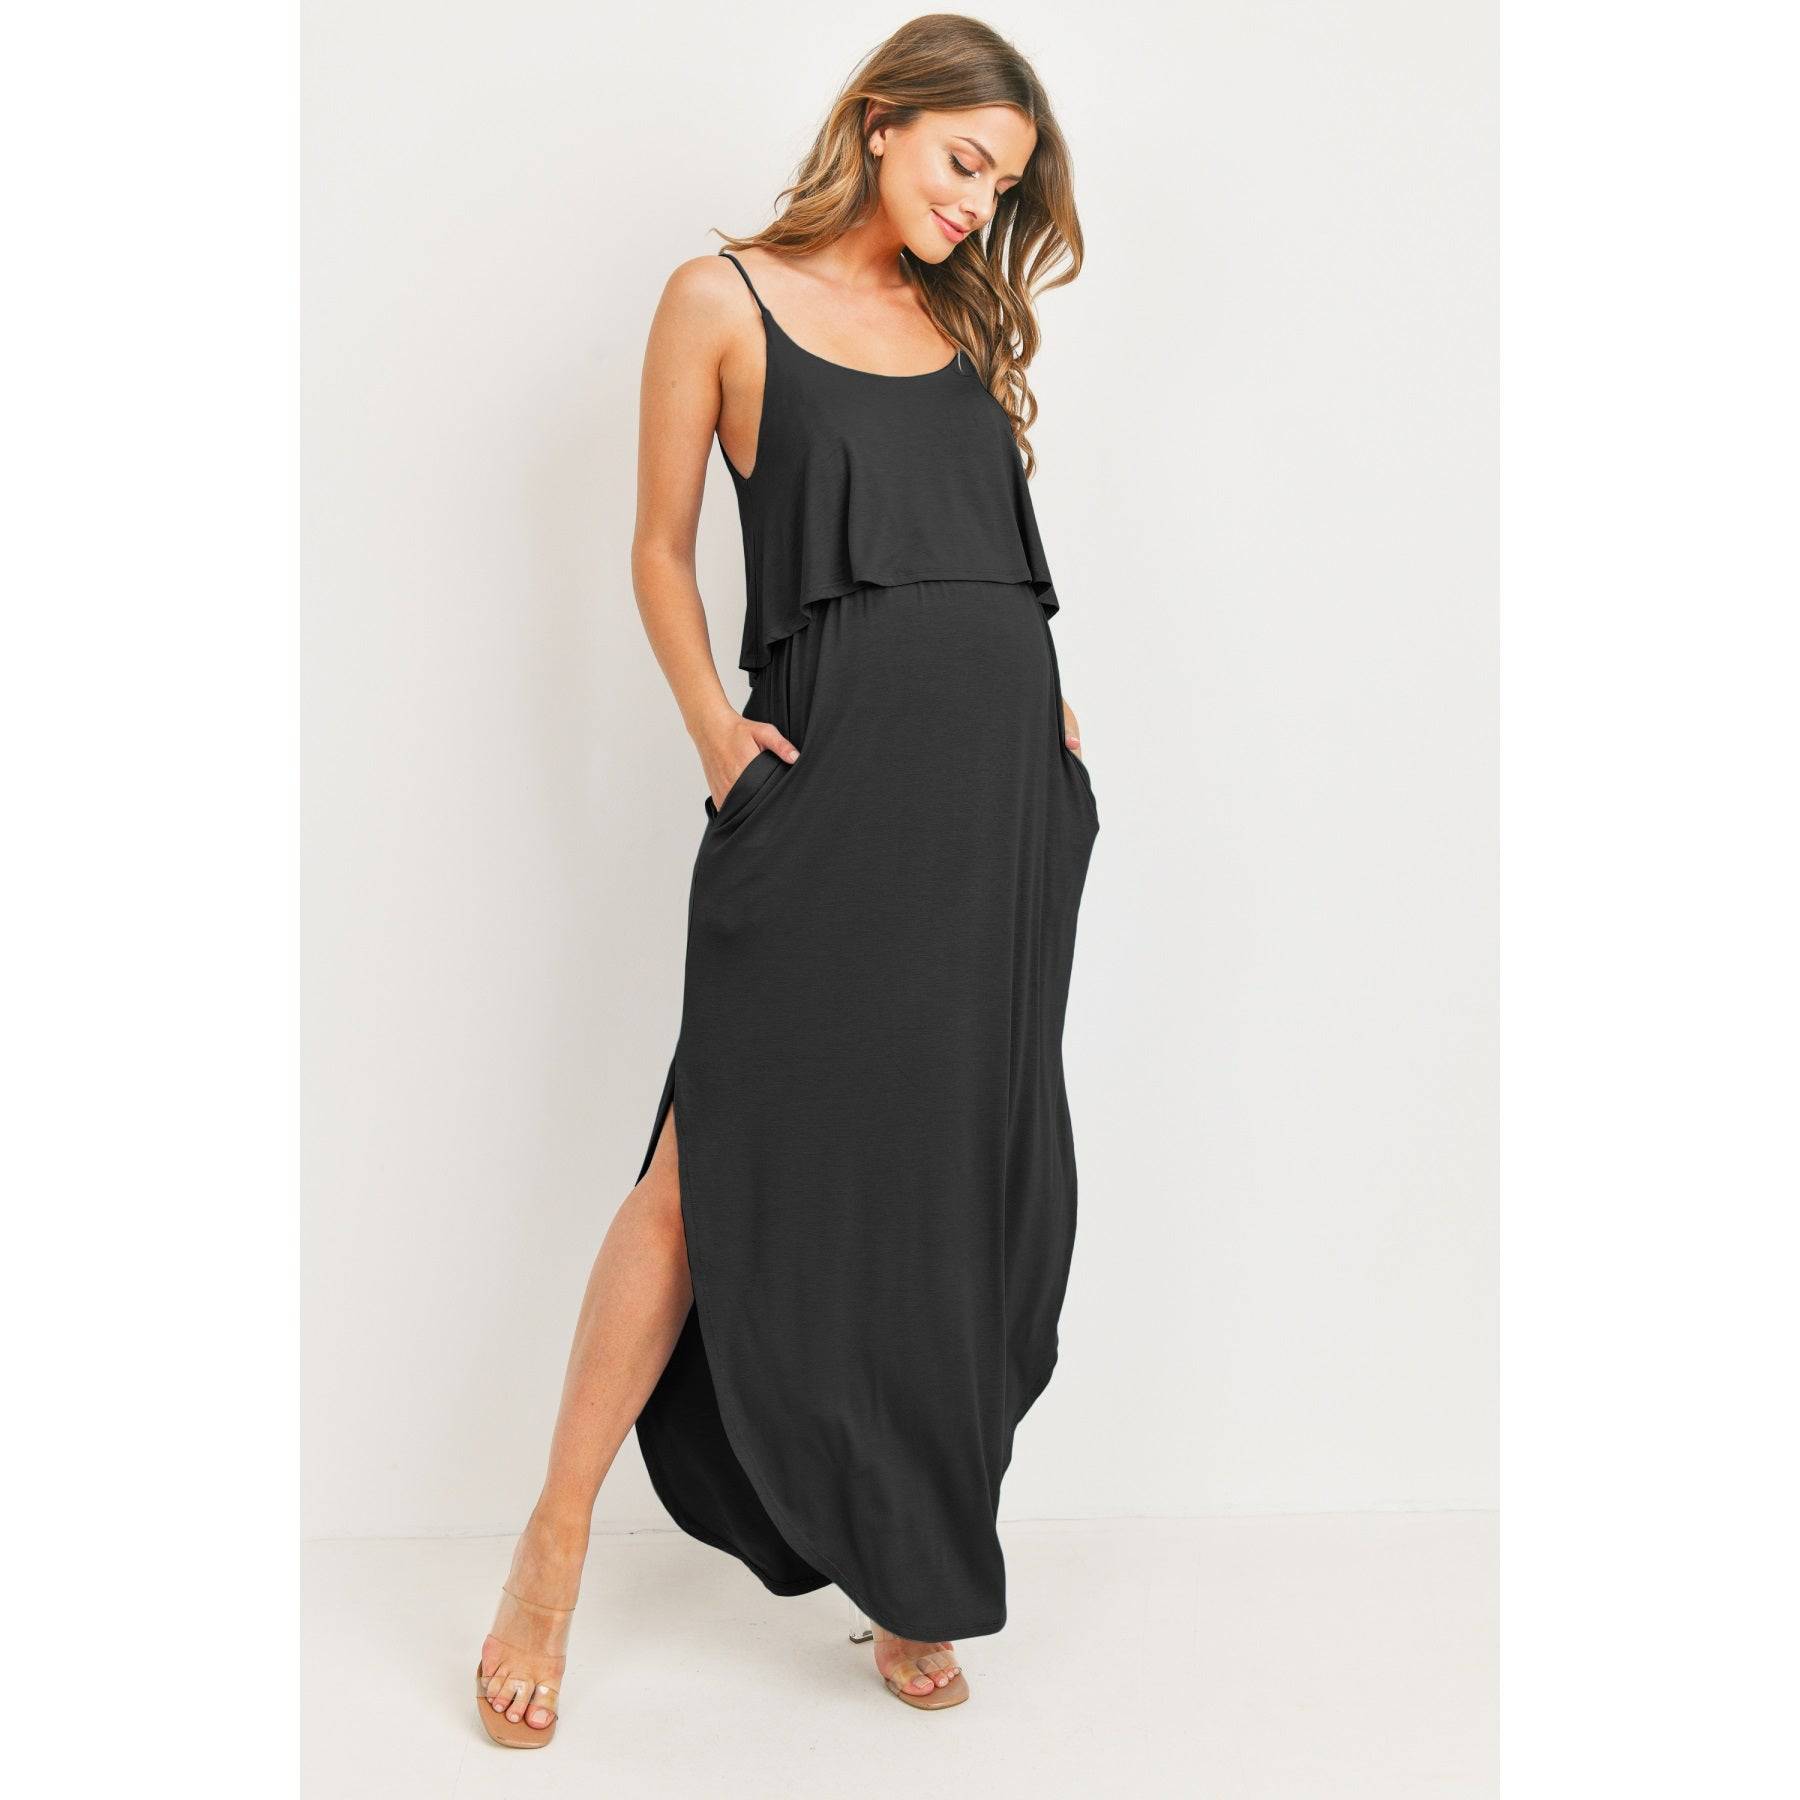 Black Overlay Top Maternity Nursing Dress - Stella Lane Boutique